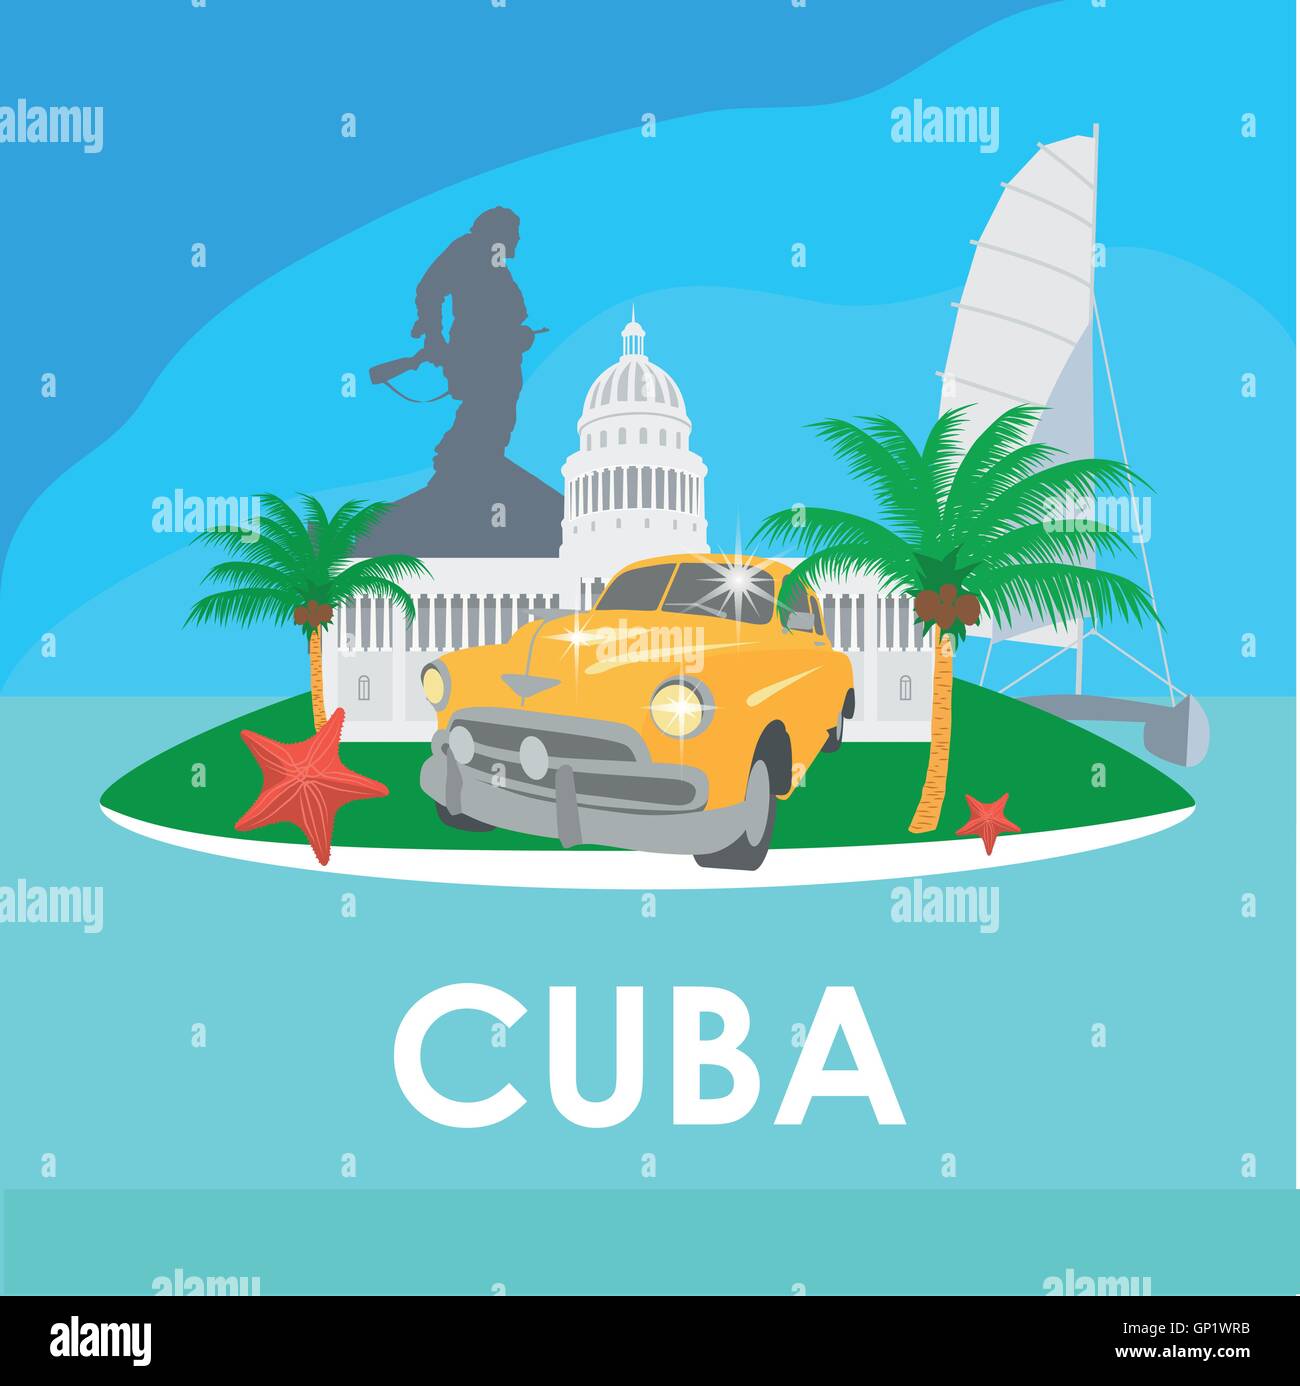 Cuba travel symbols - capitol, old car, palms, starfish, Che Guevara monument Stock Vector